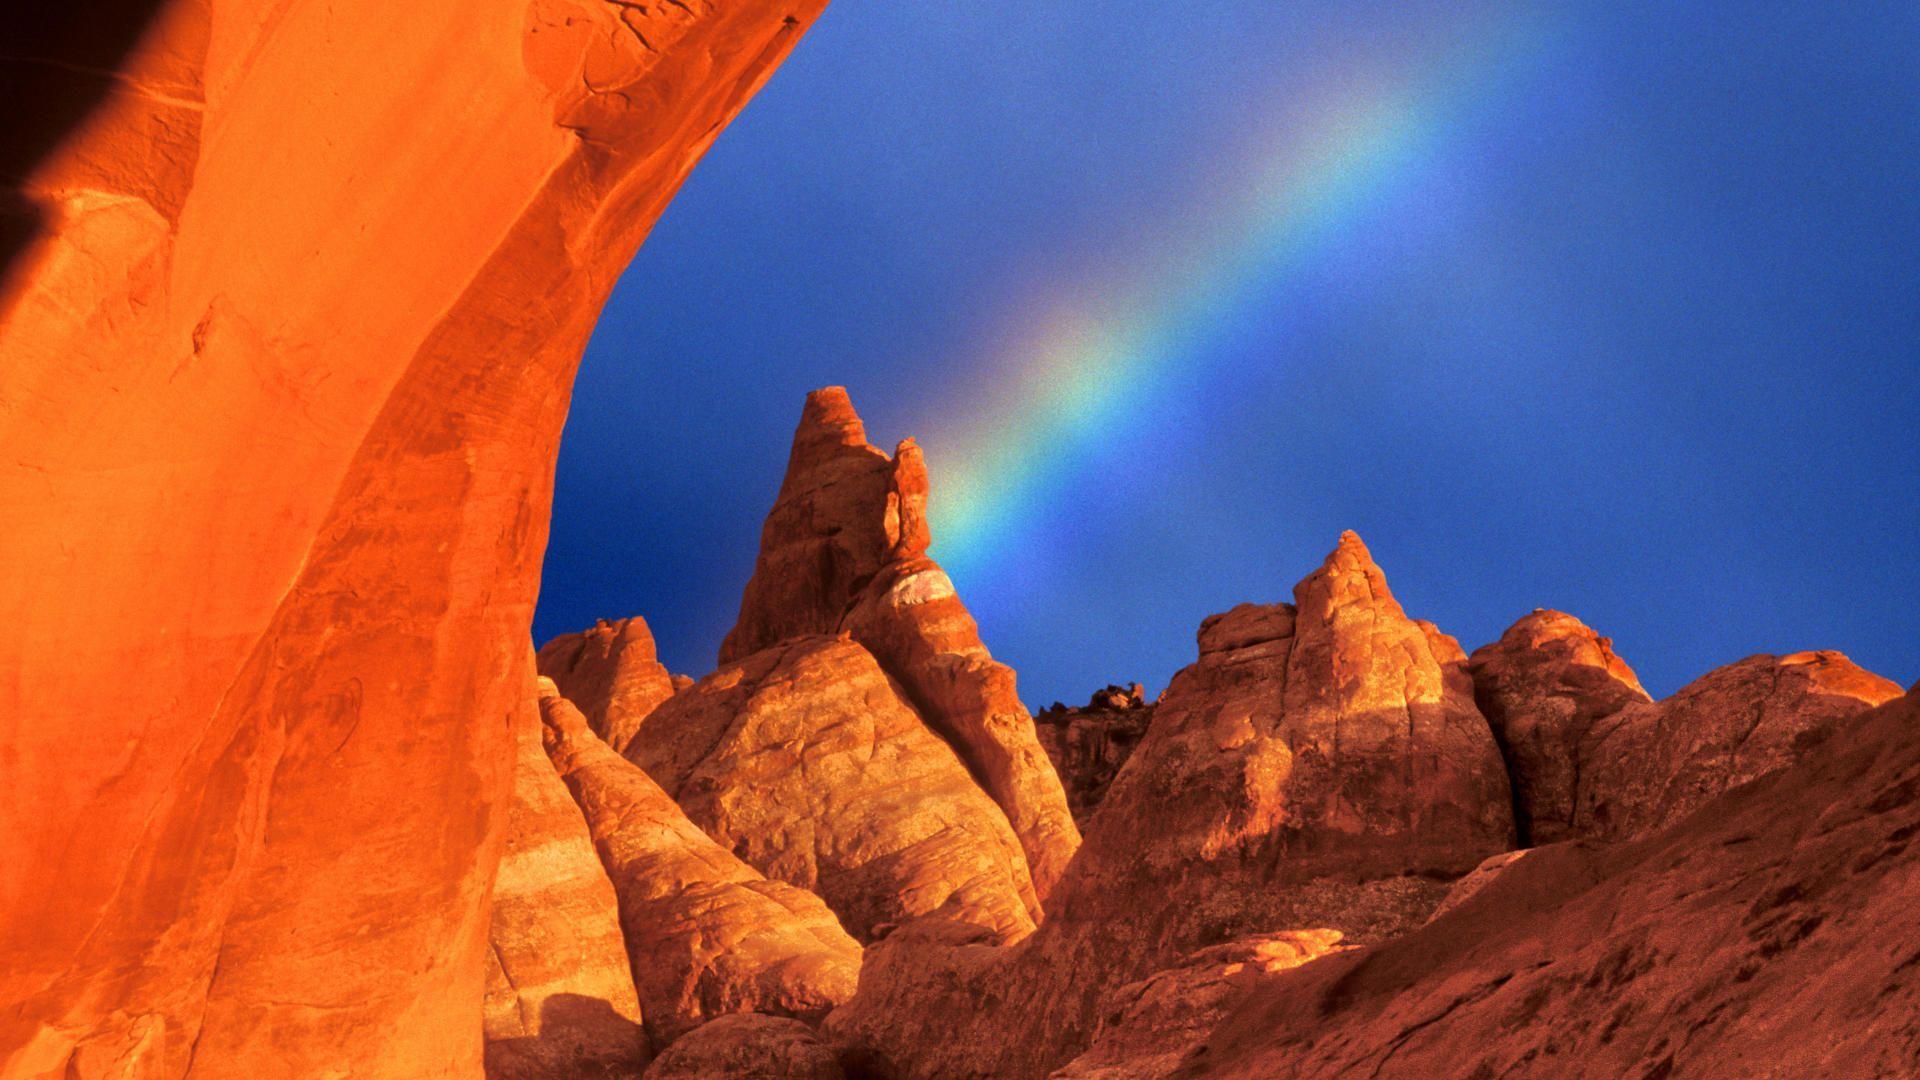 Skyline Arch Arches National Park Utah Us Travel photo